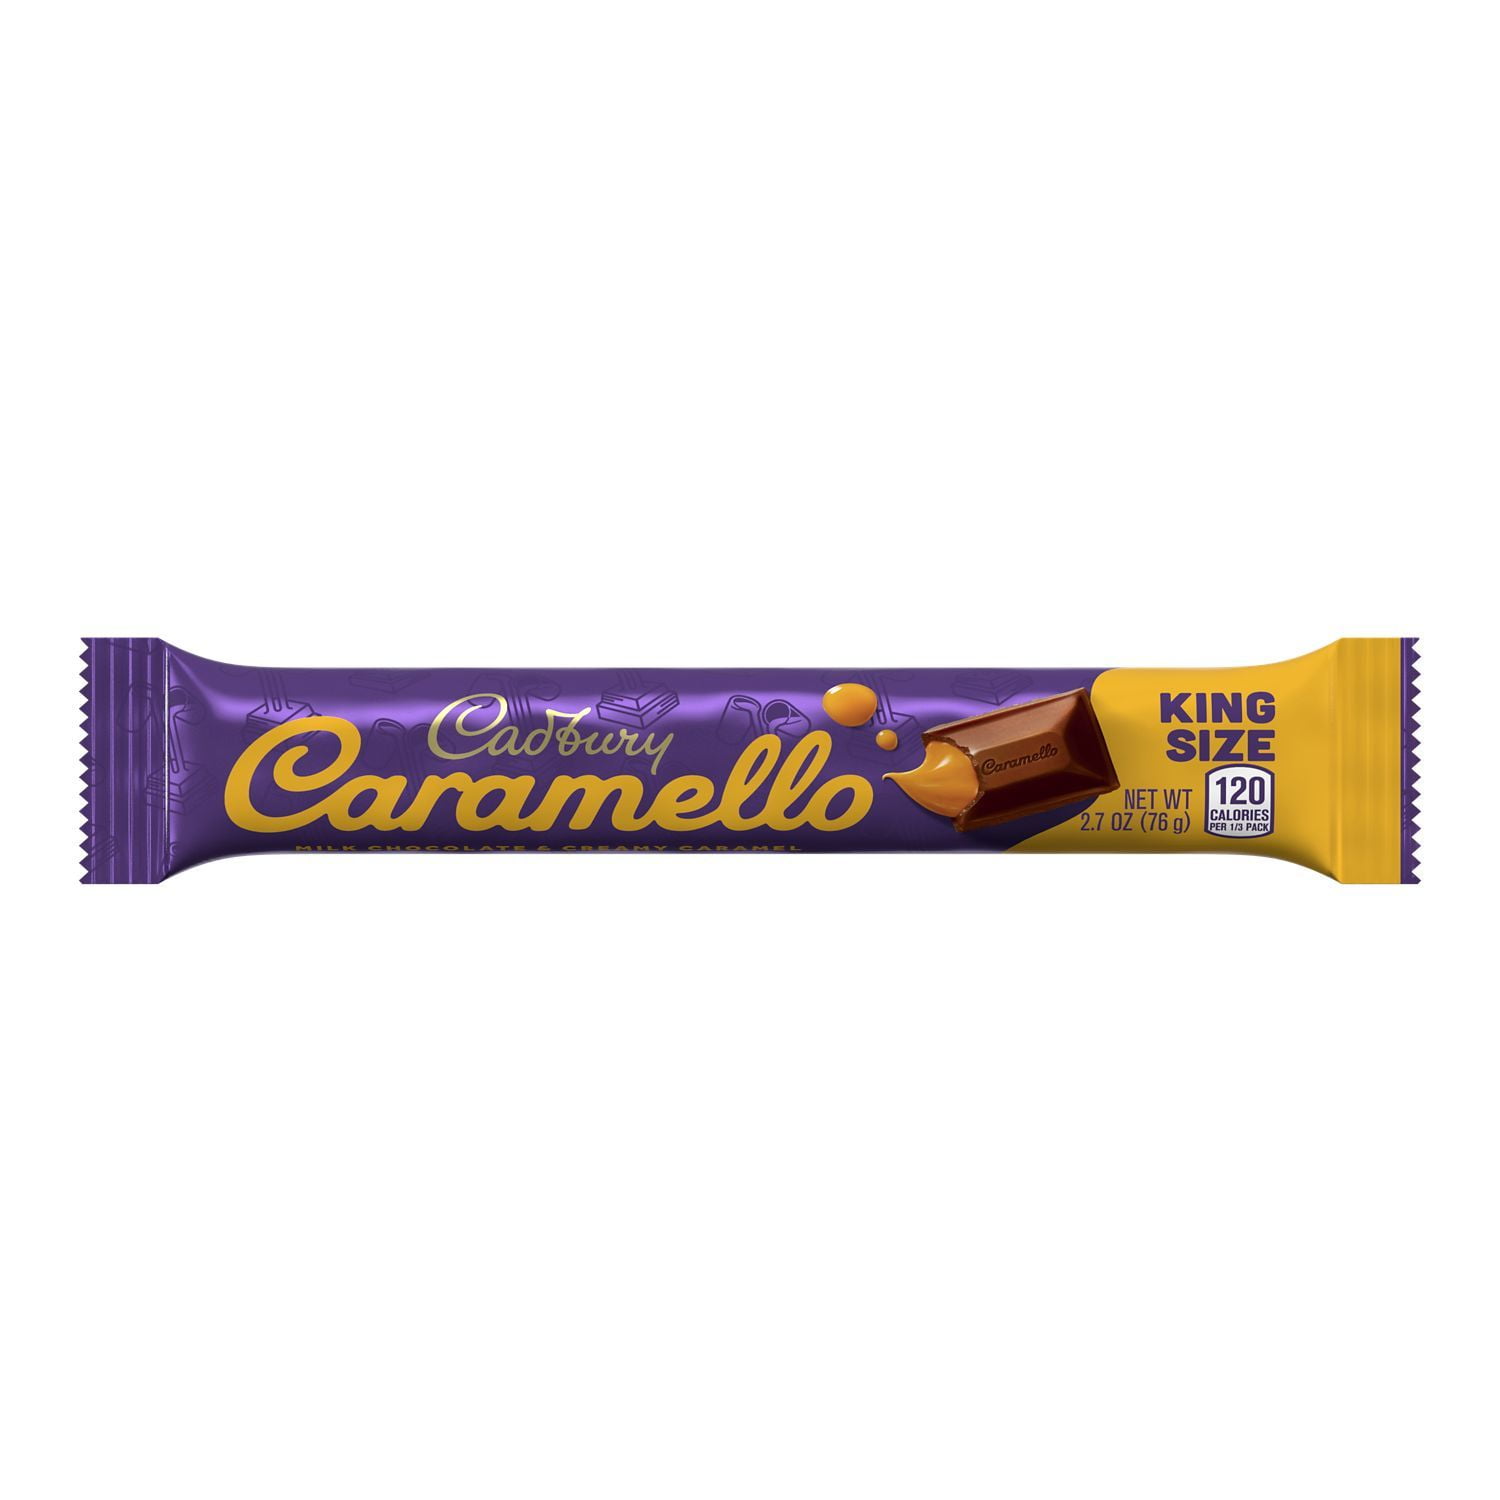 CADBURY, CARAMELLO Milk Chocolate and Creamy Caramel King Size Candy, 2.7 oz, Bar